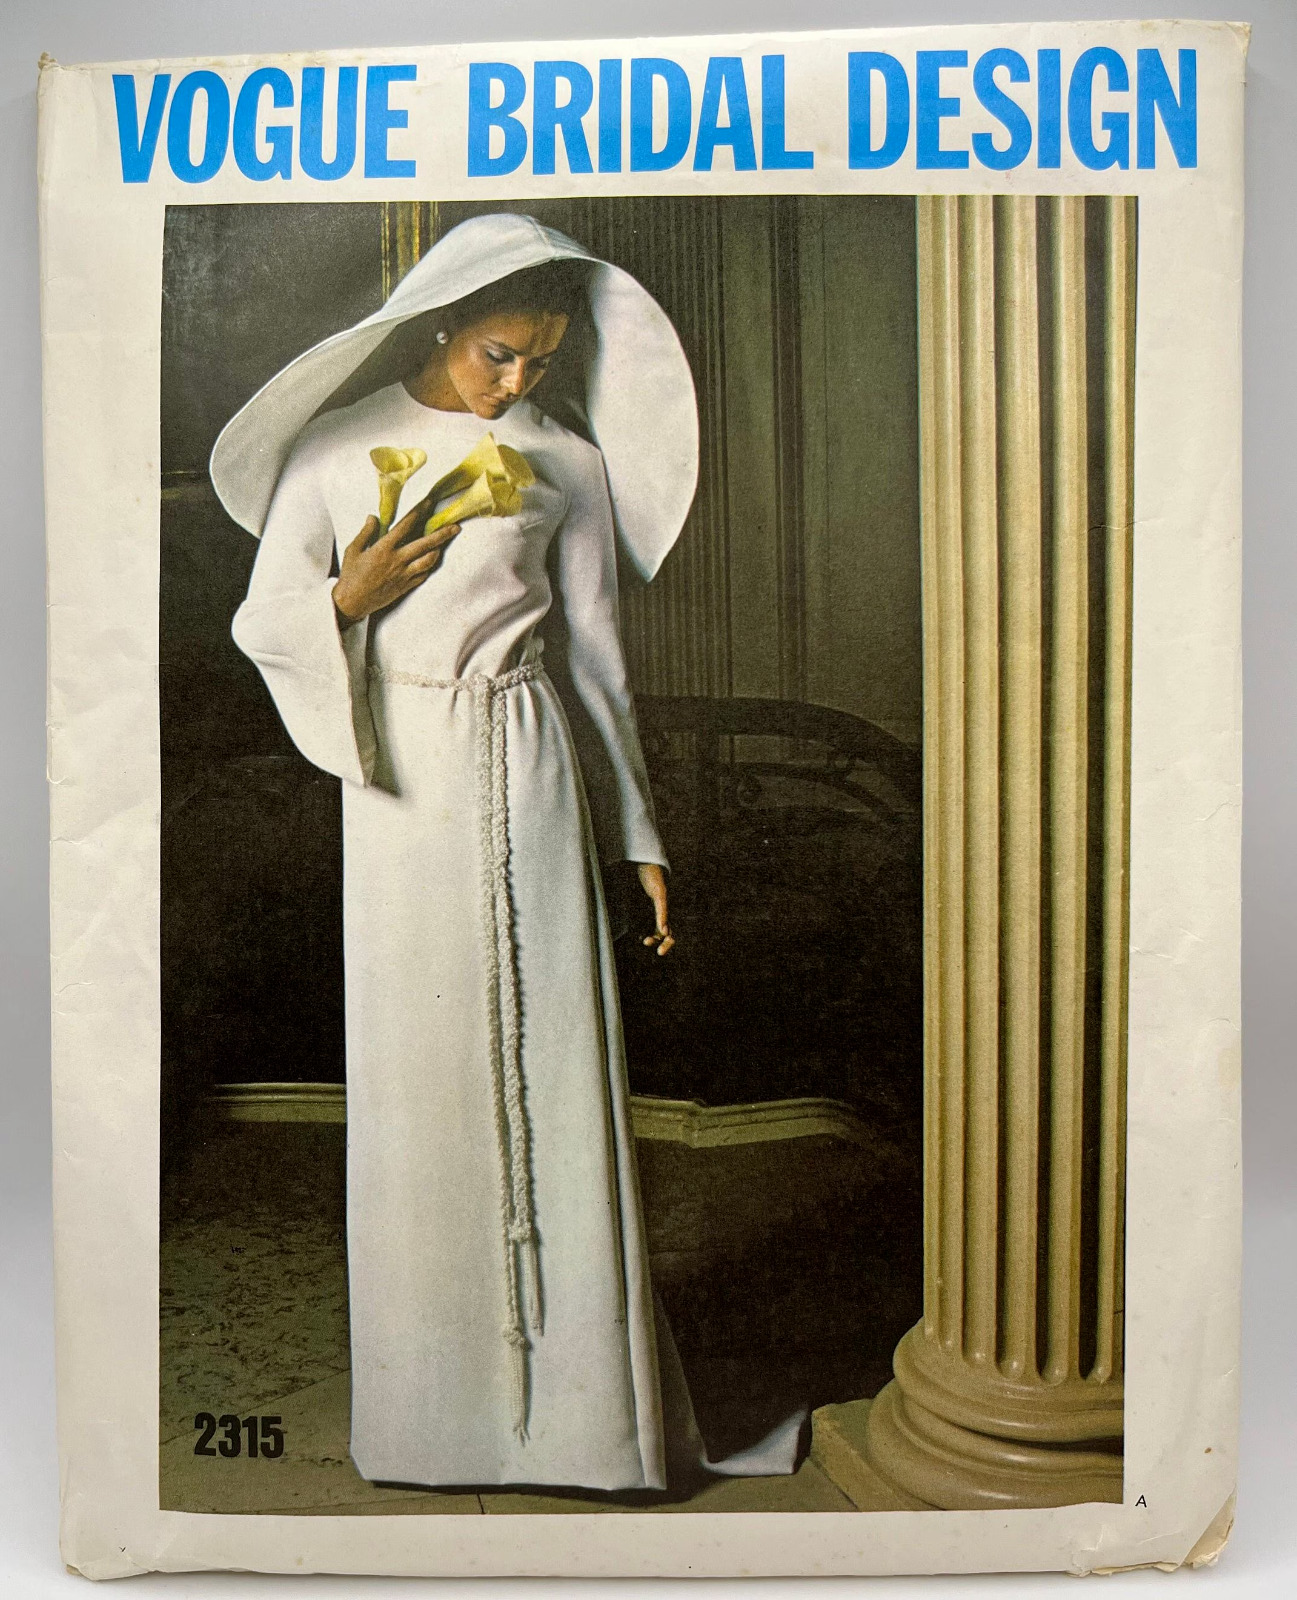 Vogue 1970 Bridal Pattern 2315 Size12 Bust34 Hips36 Jewel Neck Bell Sleeve Train